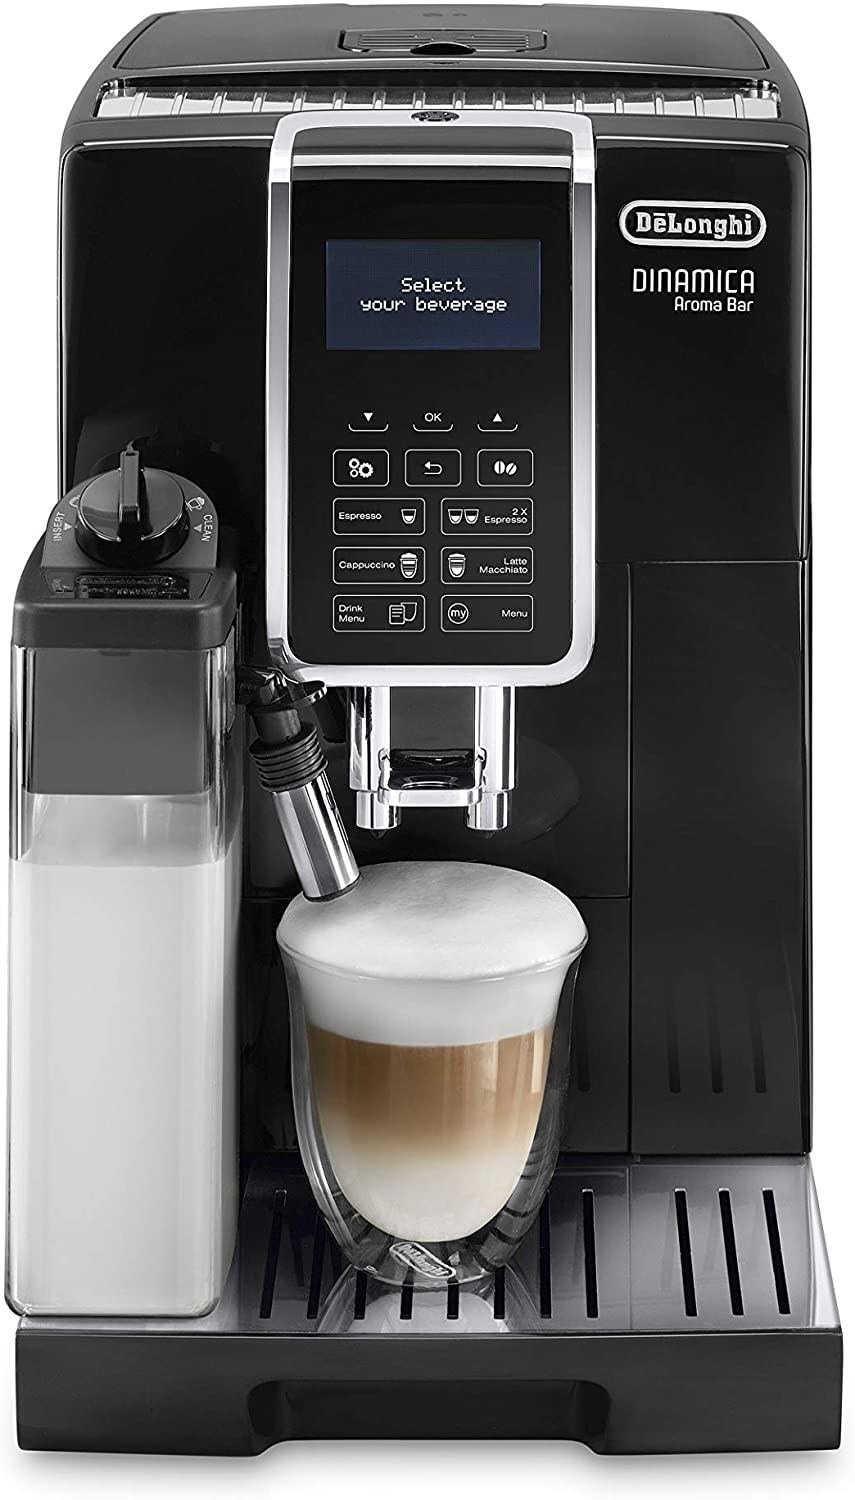 De Longhi ECAM220.22 Macchine del Caffè Automatica Caffè Macinato